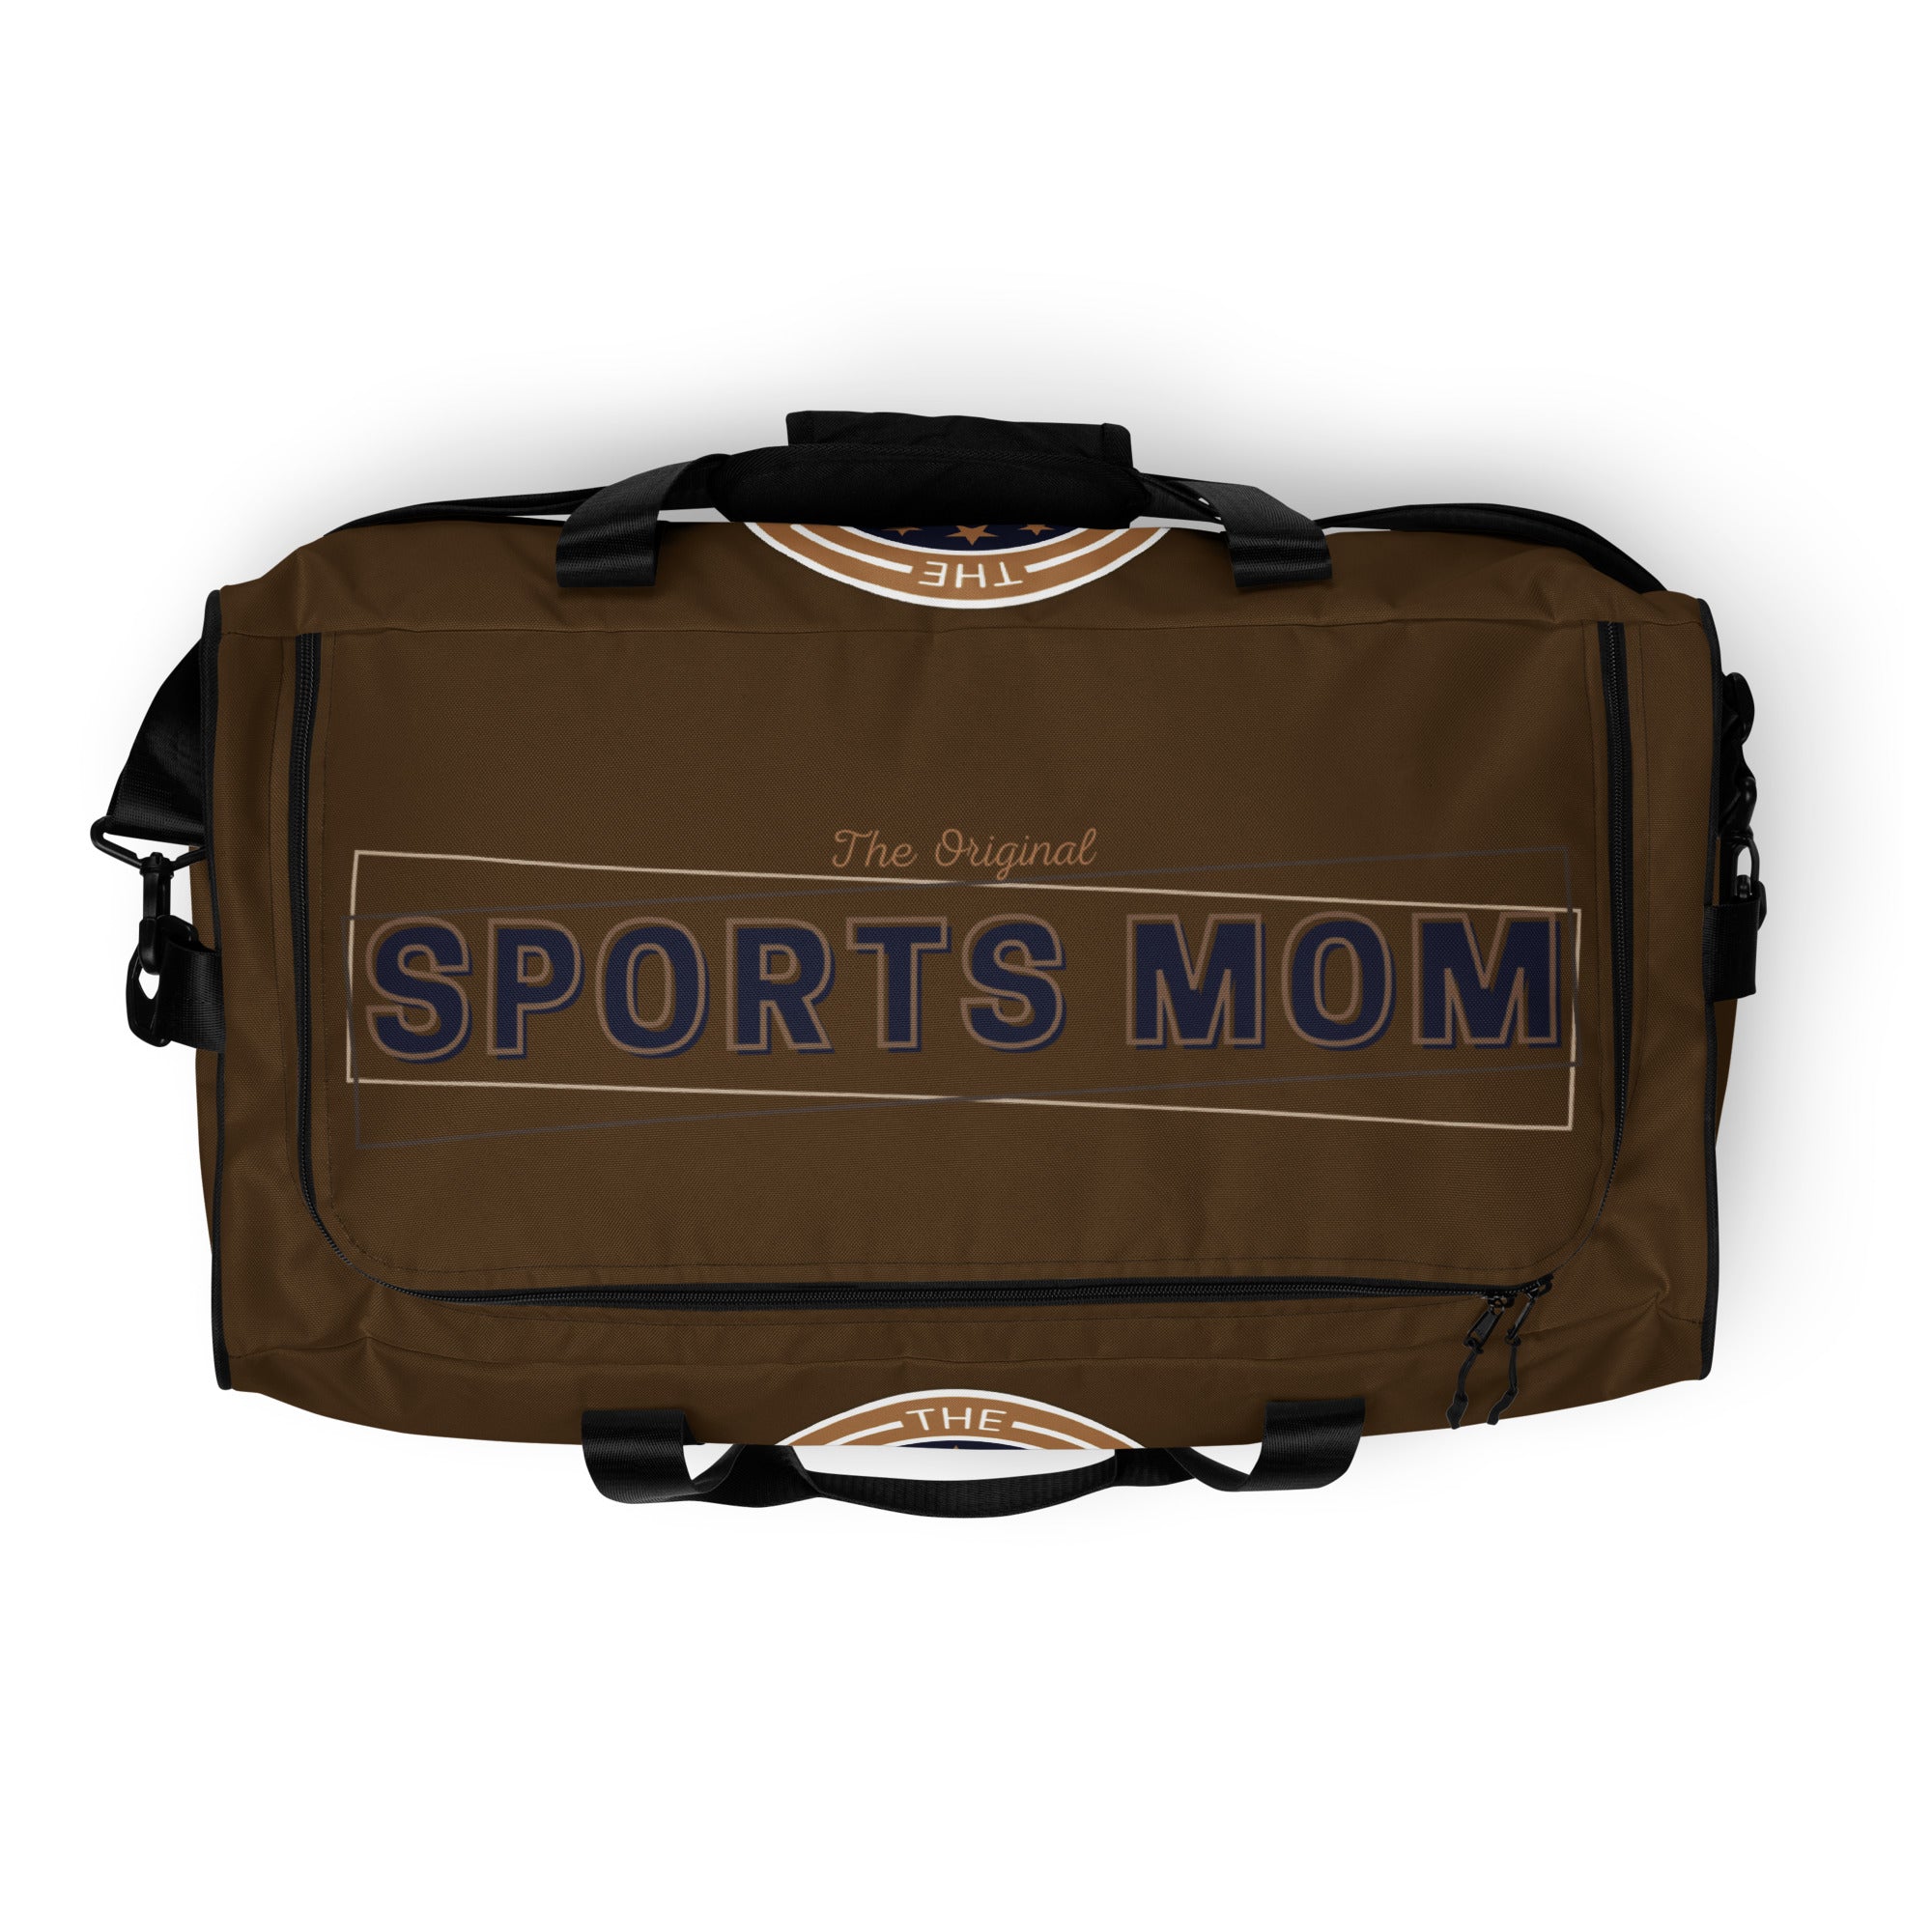 Sports Mom - Away Game - Ultimate Duffle Bag - Brown